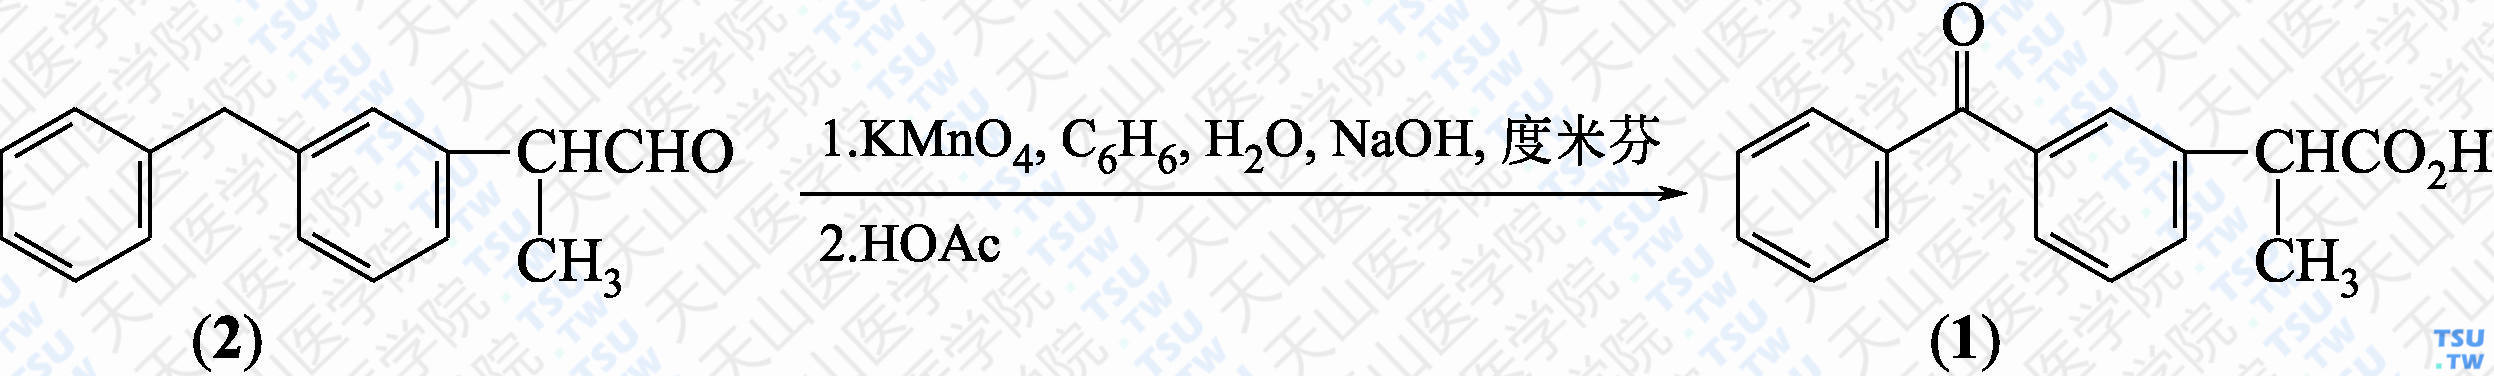 2-（3-苯甲酰苯基）丙酸（分子式：C<sub>16</sub>H<sub>14</sub>O<sub>3</sub>）的合成方法路线及其结构式